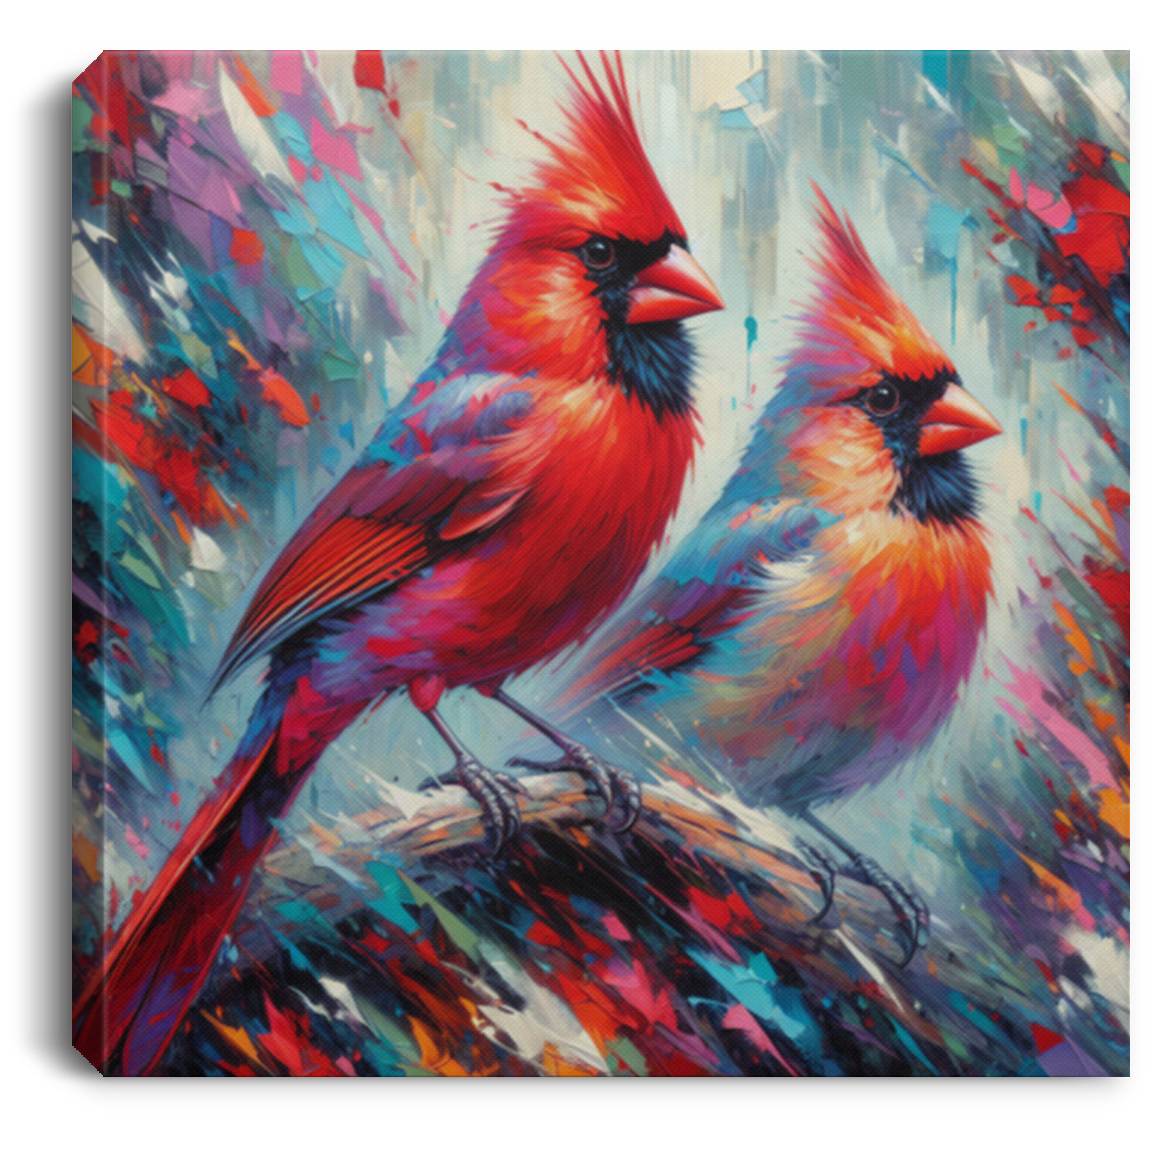 Early Winter Cardinal Pair - Canvas Art Prints